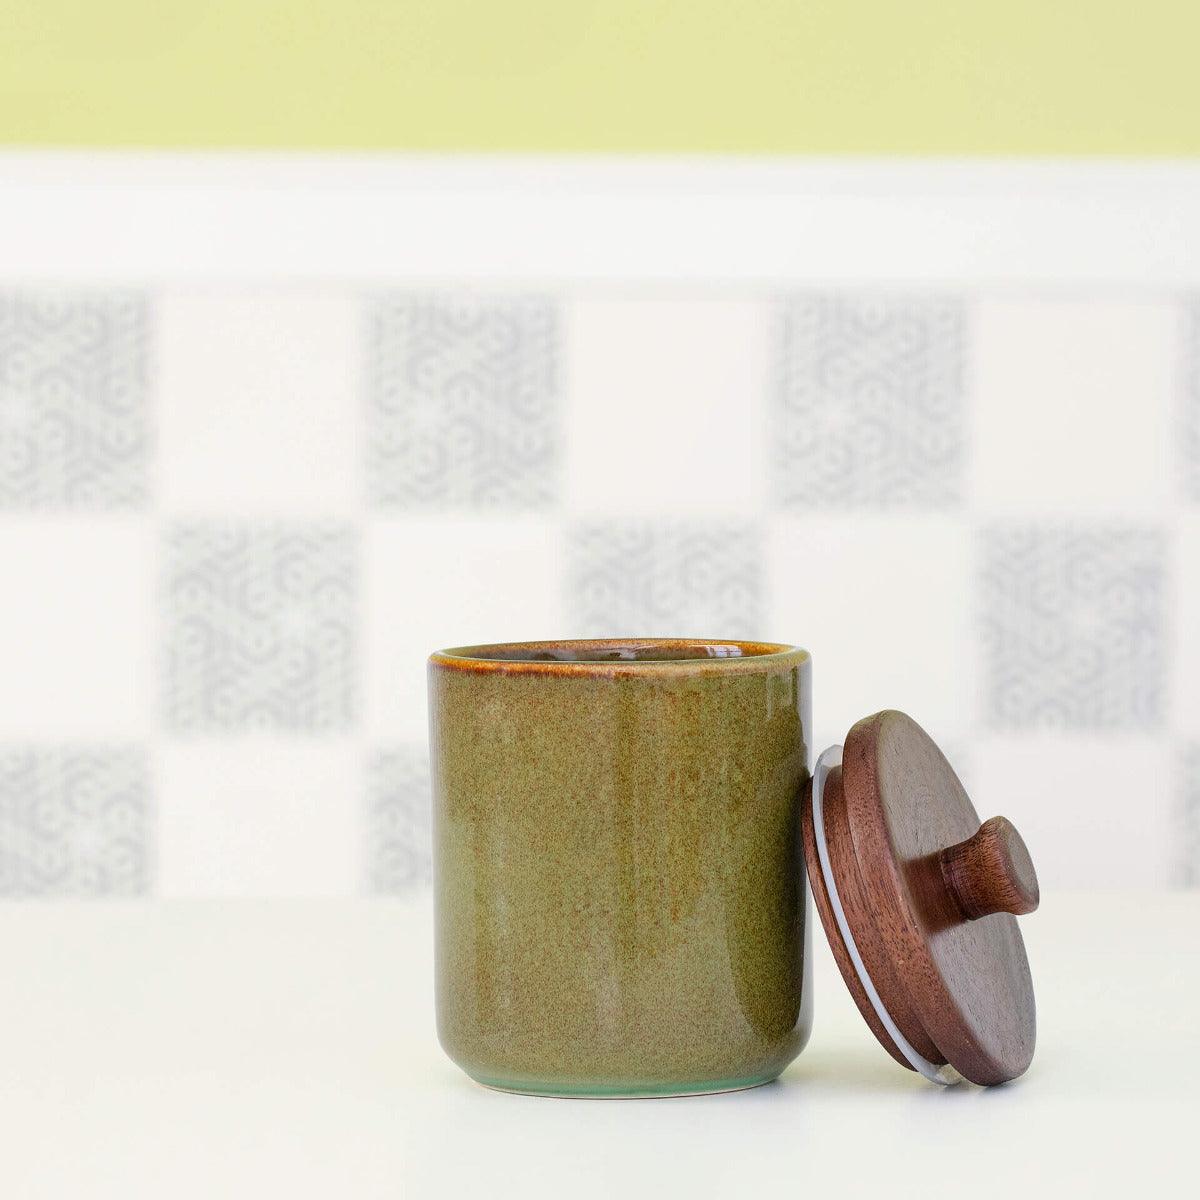 Rustic Sage Ceramic Jar with Wooden Lid (Large)